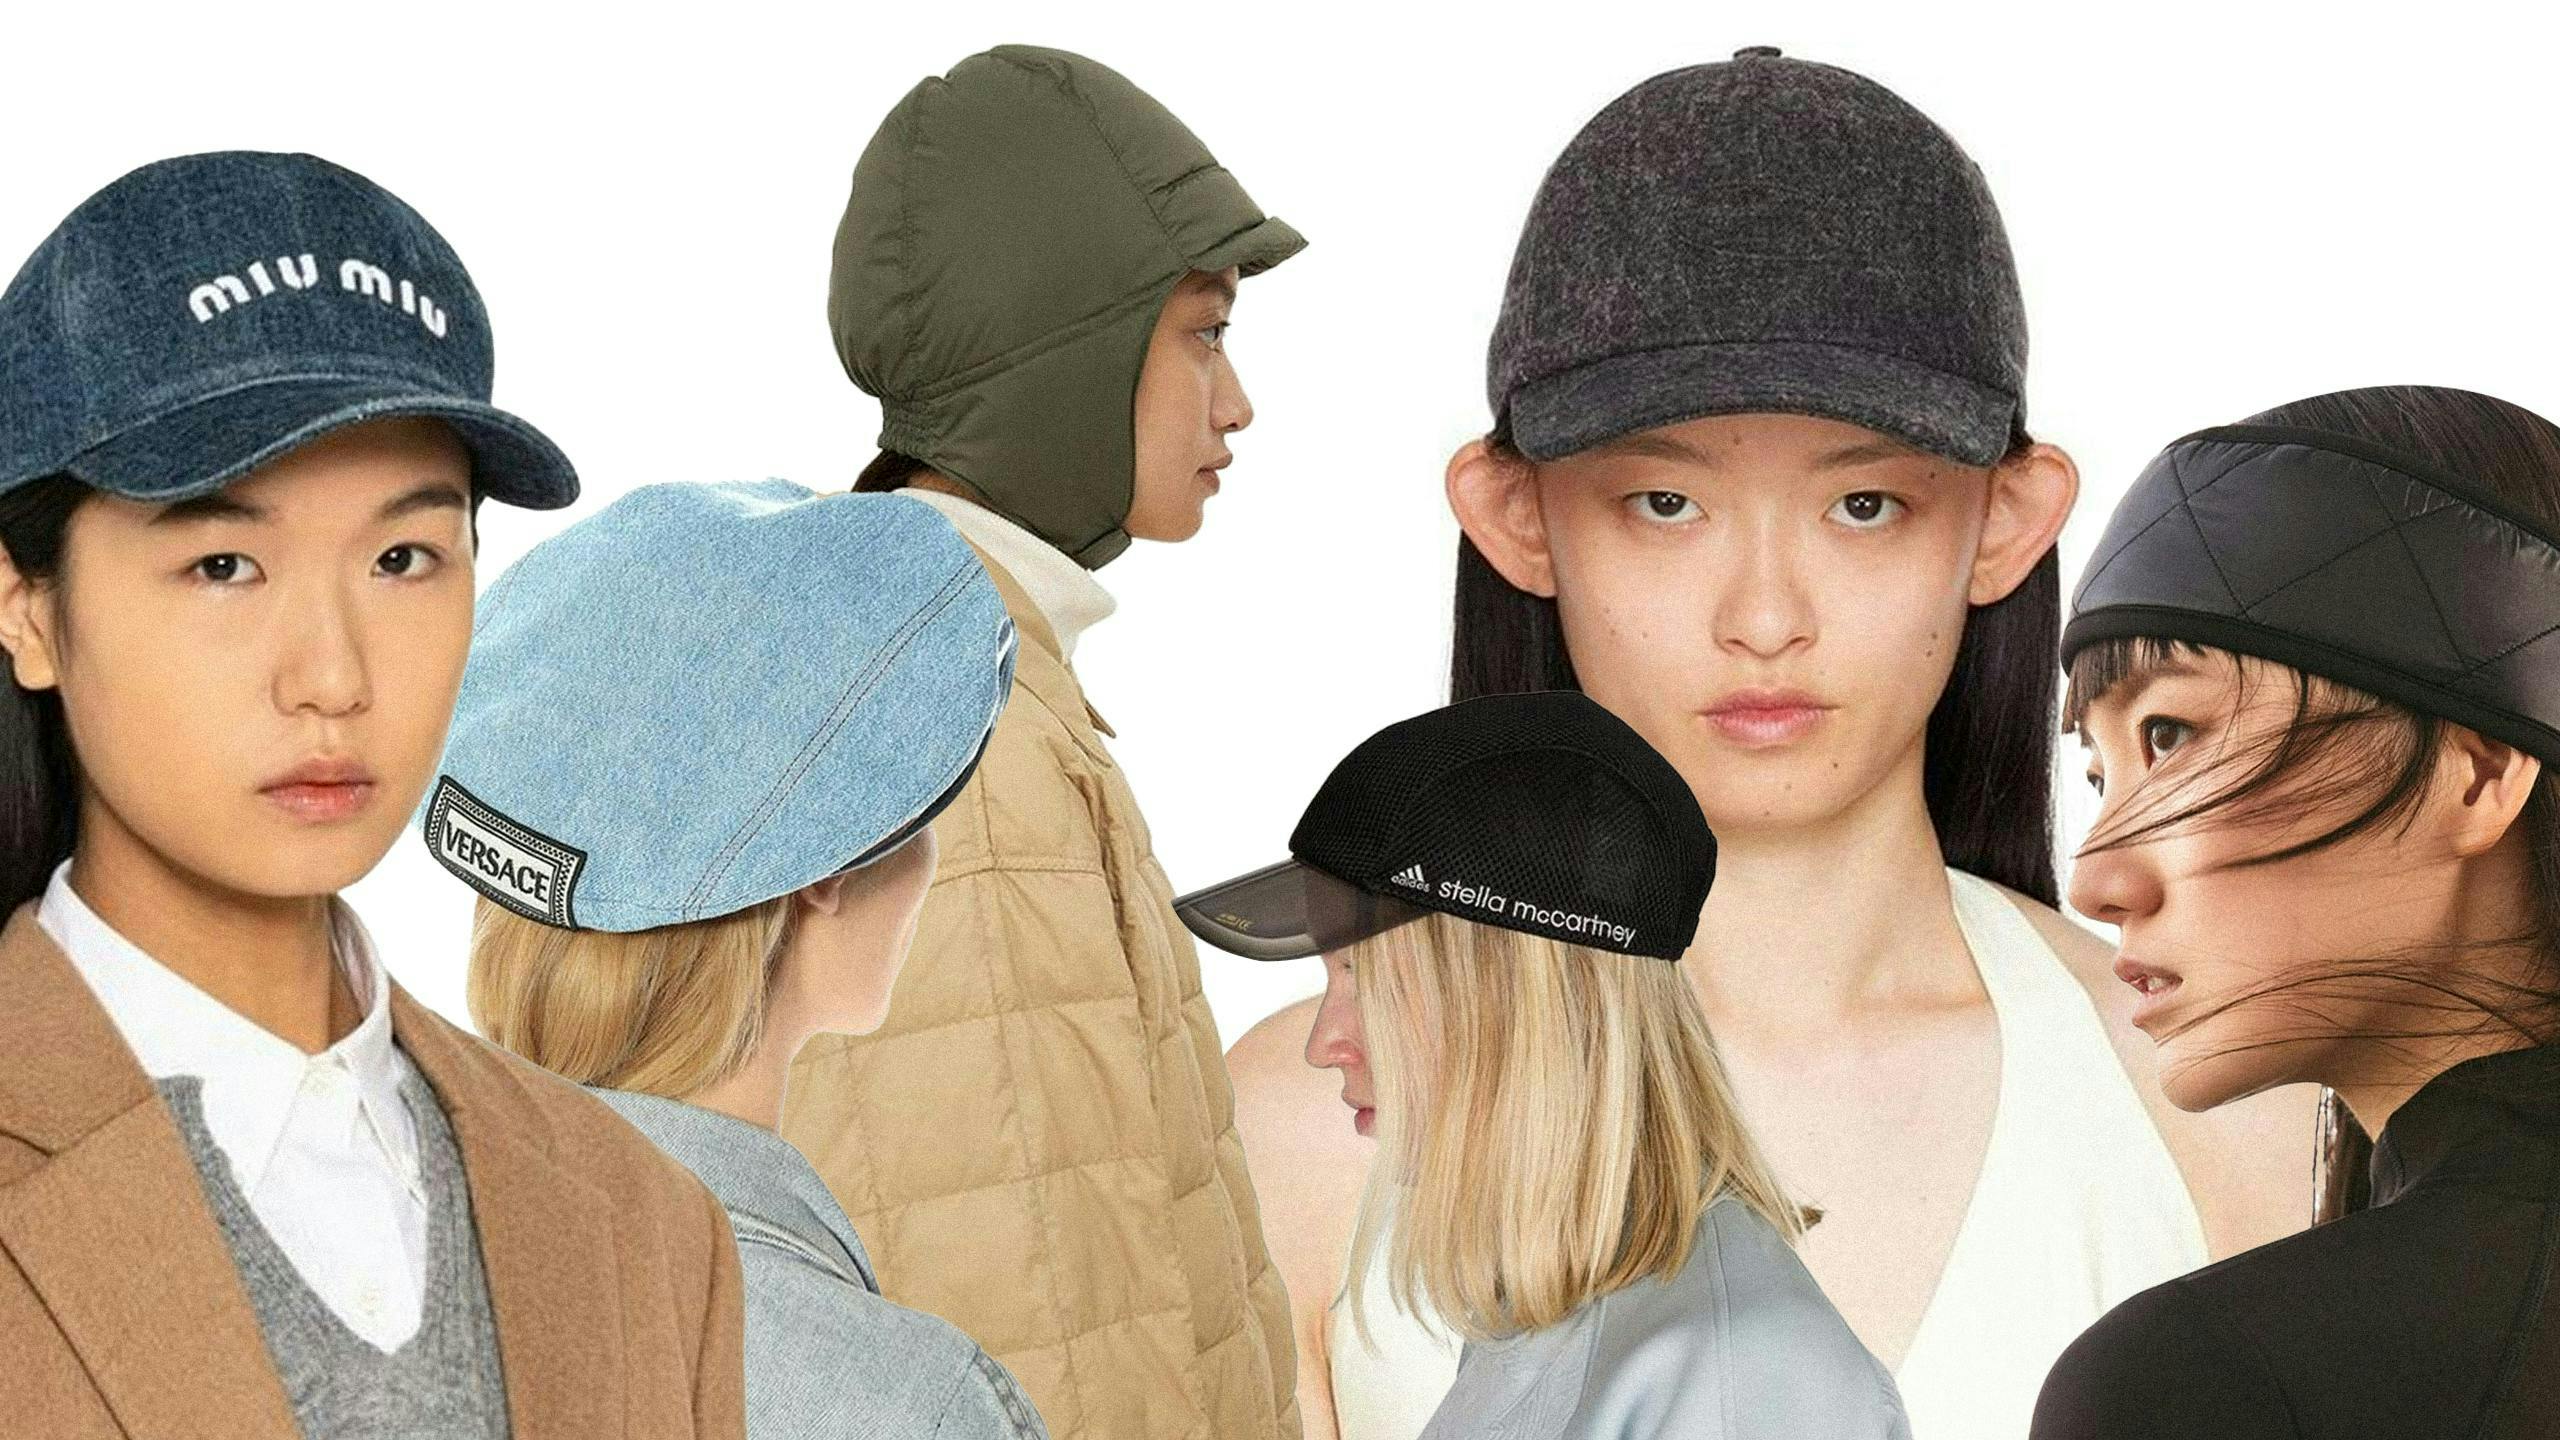 baseball cap cap clothing hat adult female person woman